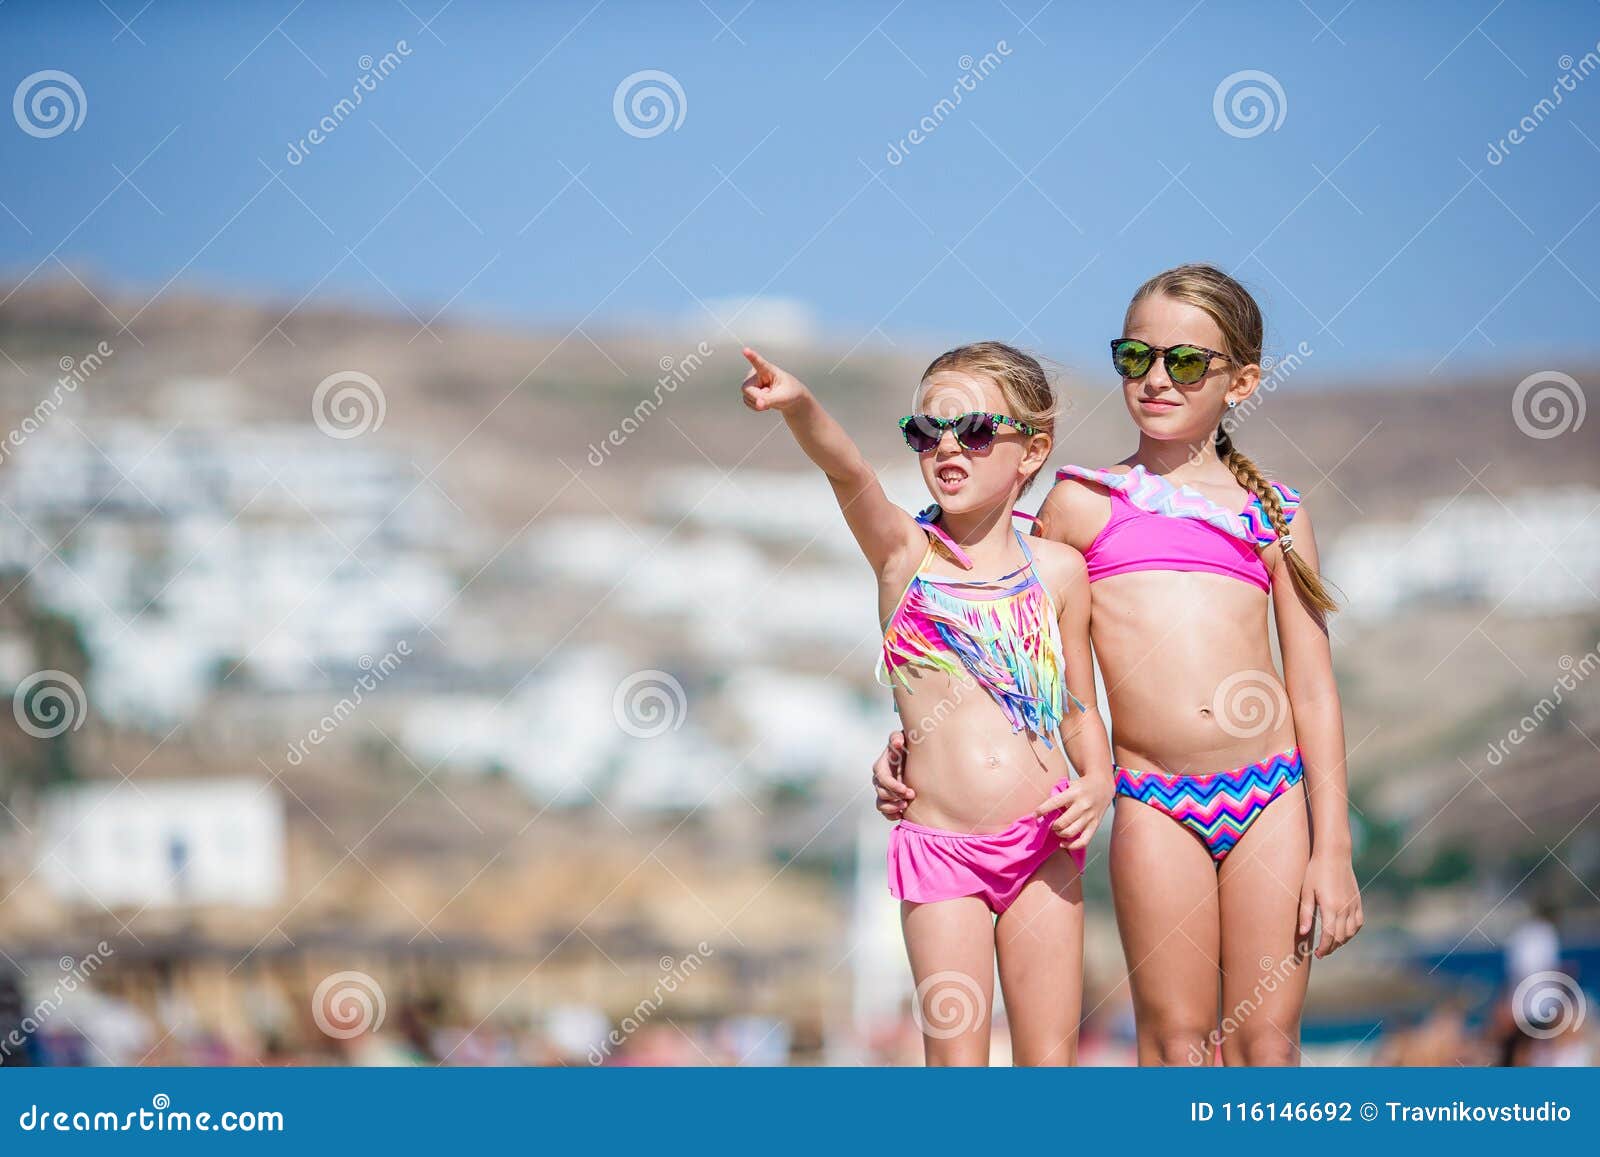 adorable little girls having fun during beach vacation.